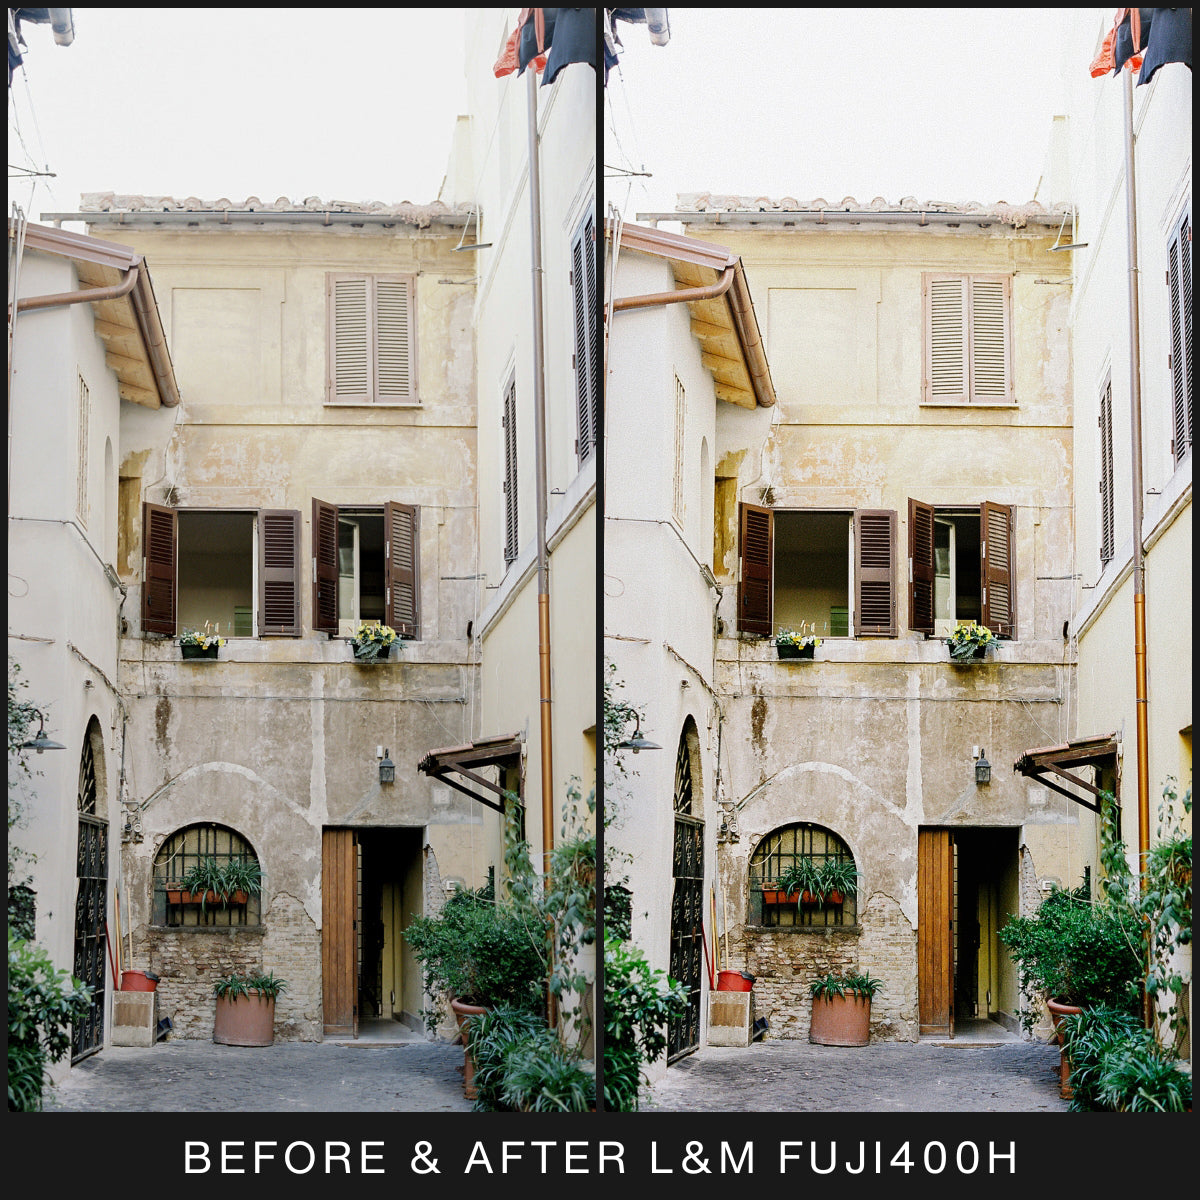  FujiFilm Film Filter Lightroom Presets For Adobe Lightroom Mobile & Desktop By Lou And Marks Presets FujiFilm